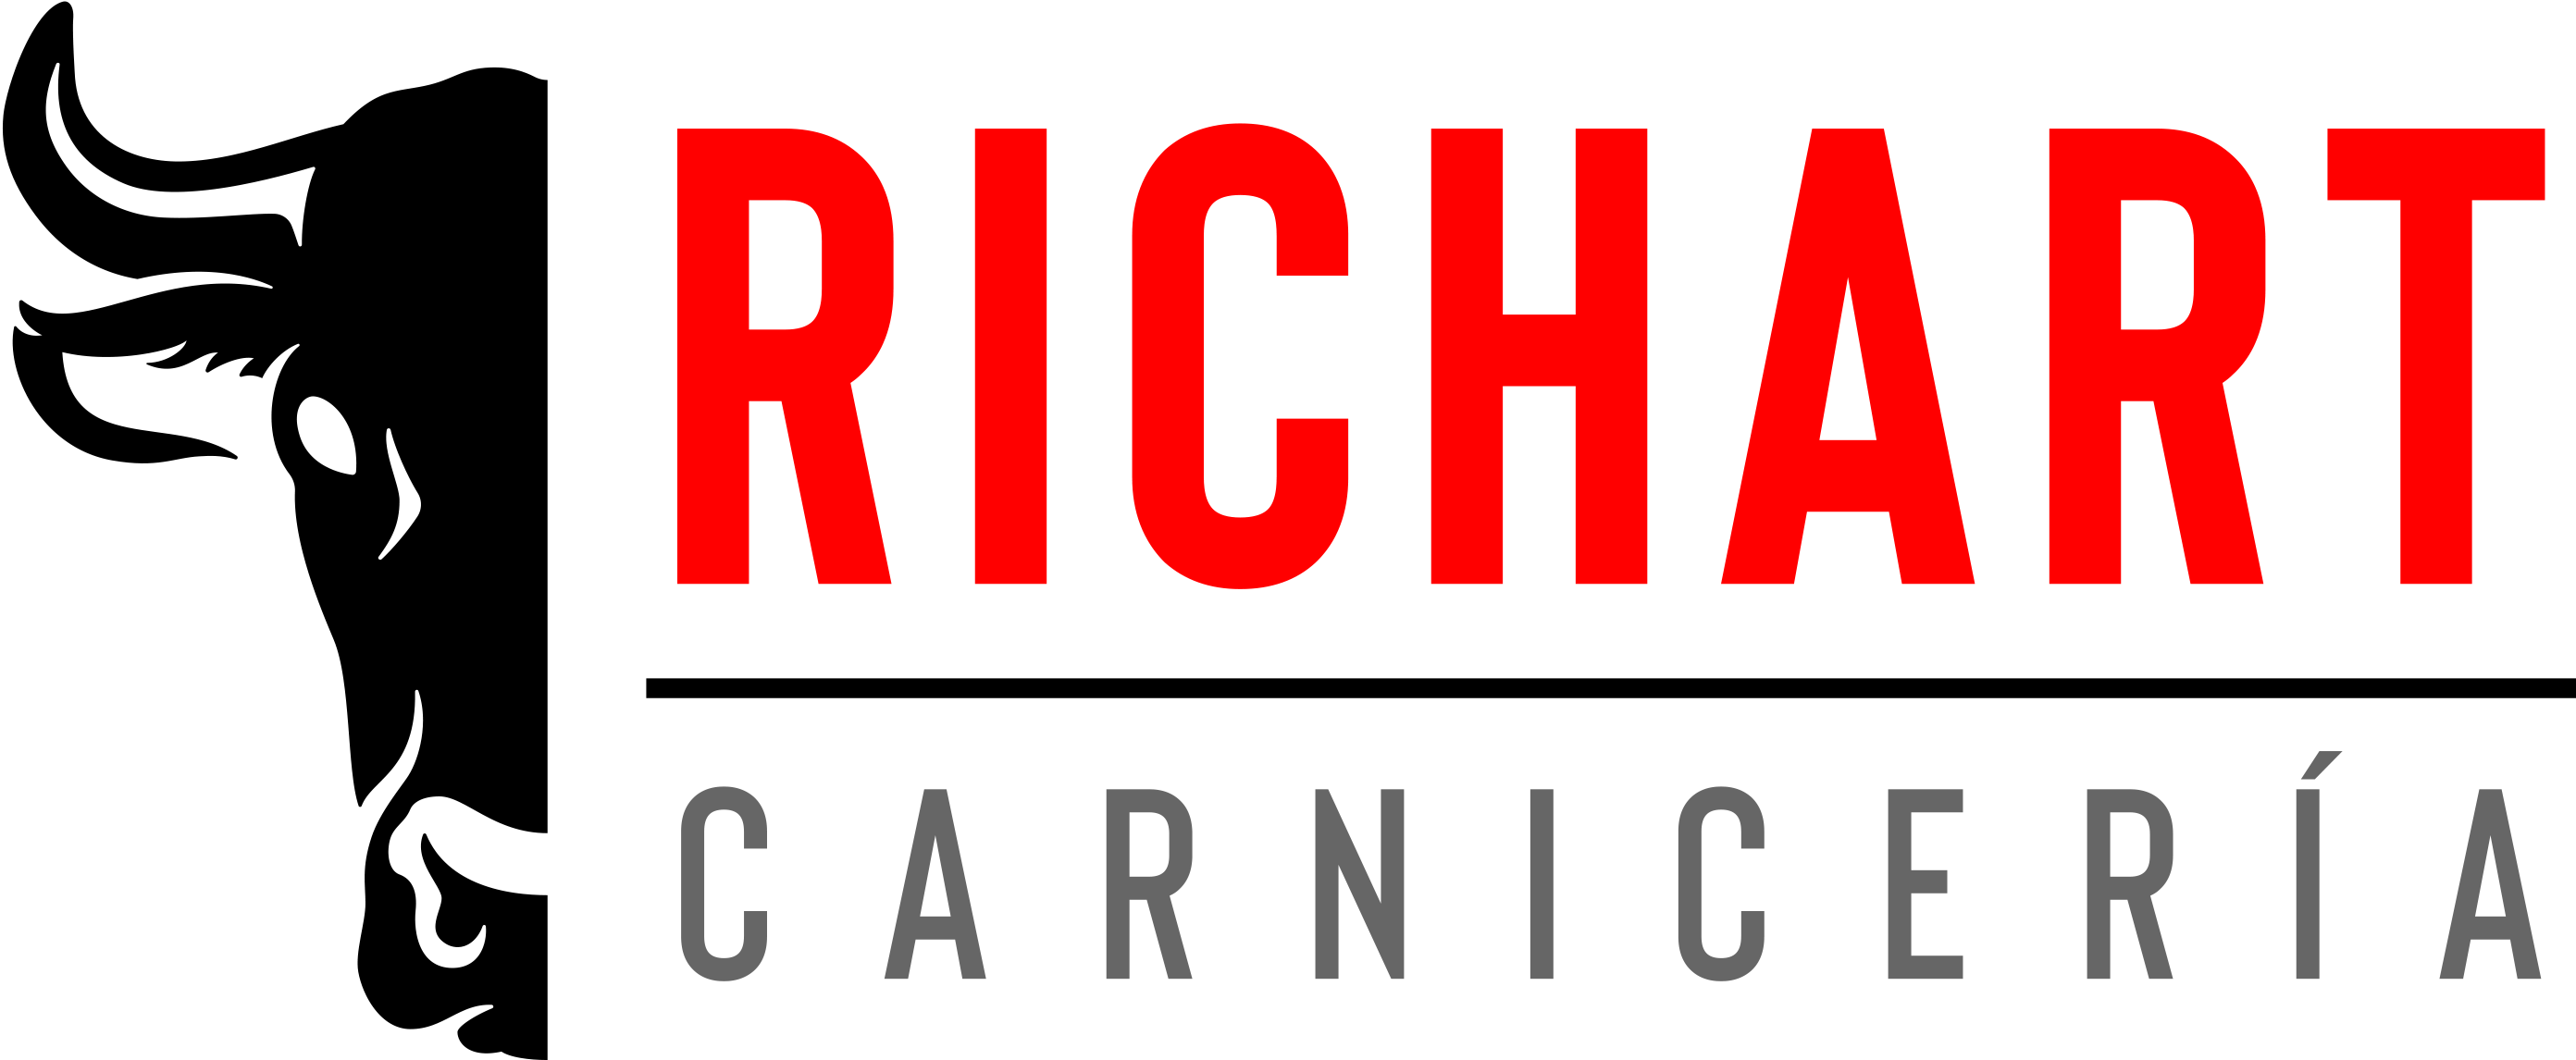 GRE CARNICERIA RICHART